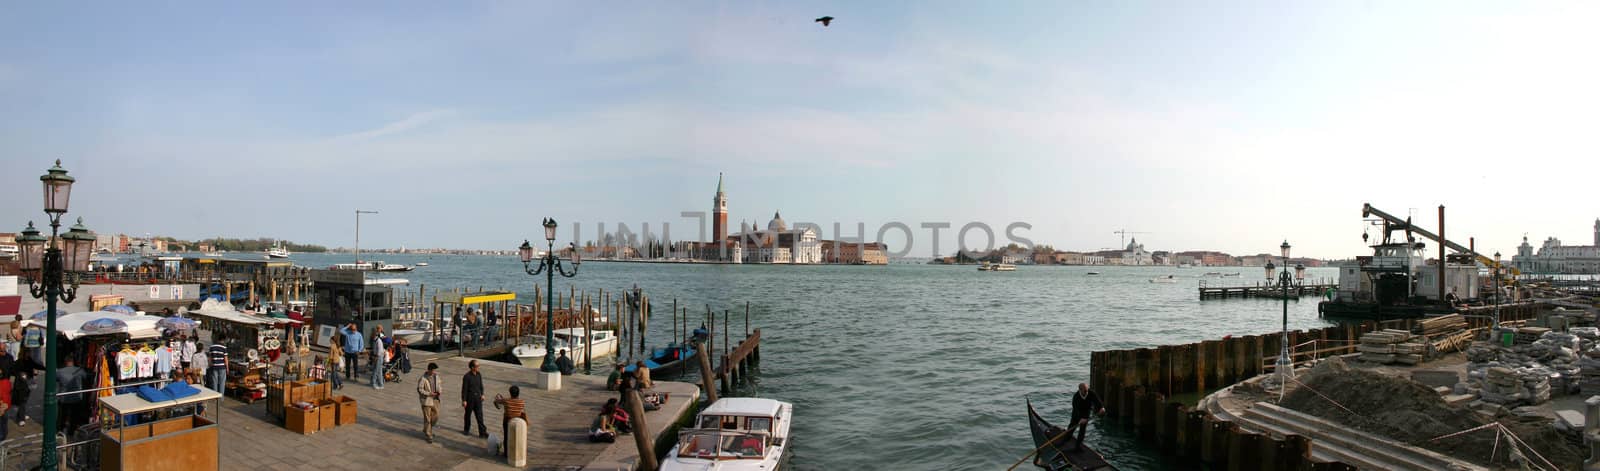 Venice by watchtheworld